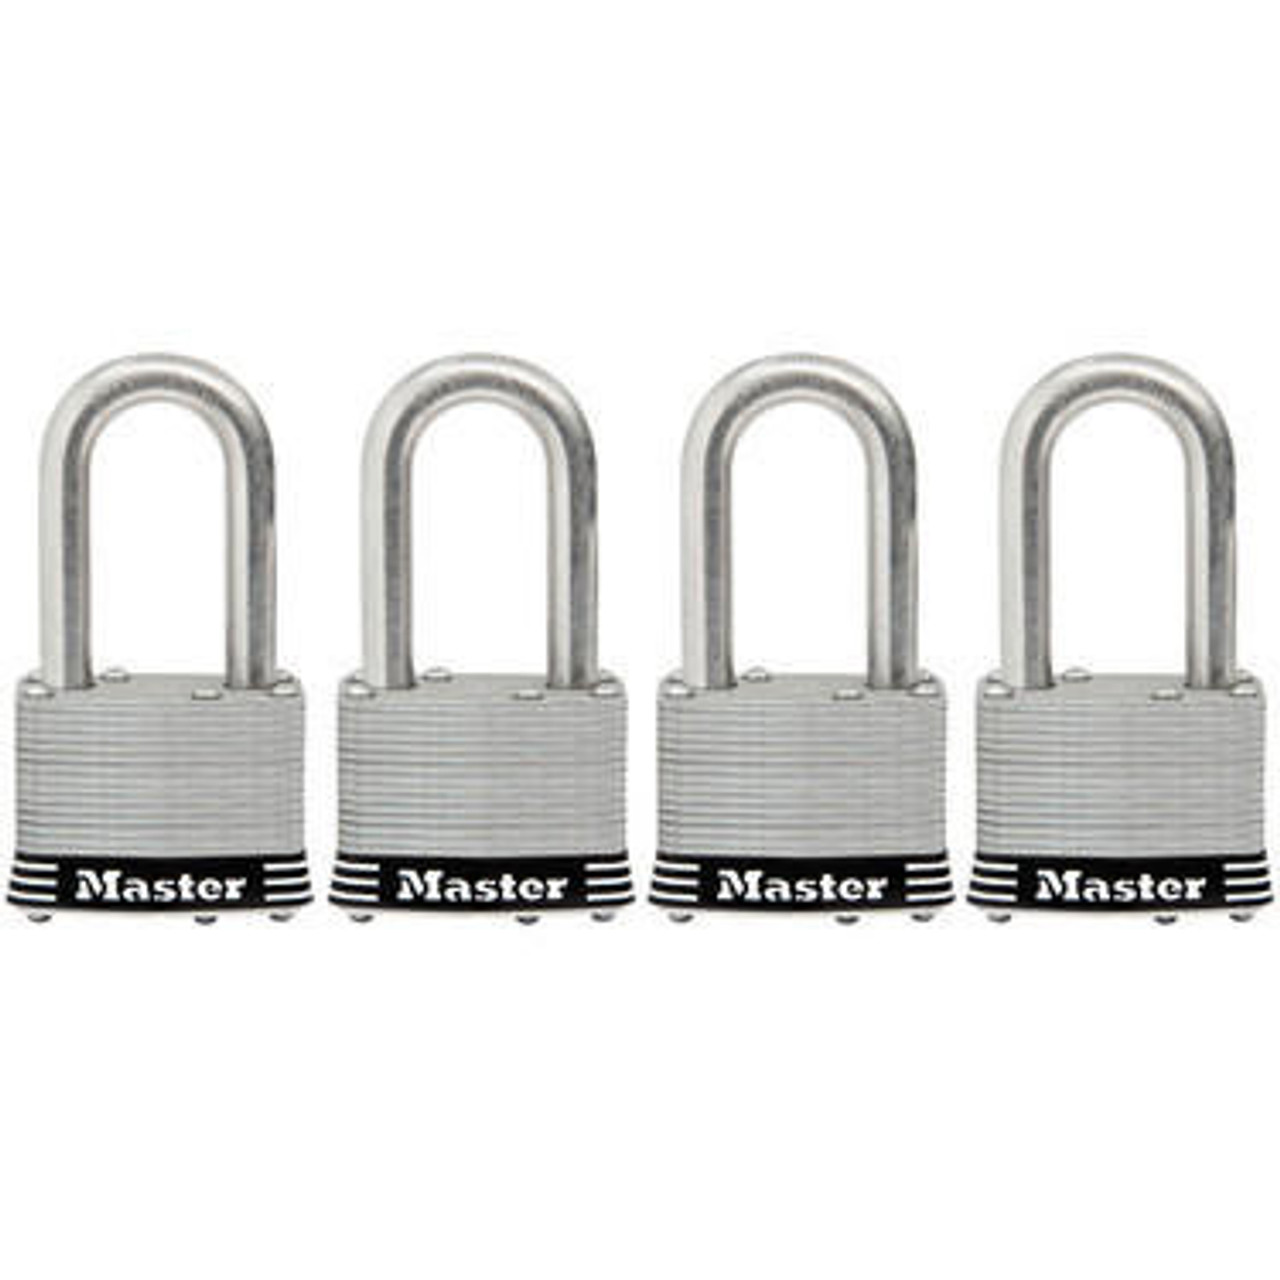 Master Lock Master Stainless Steel Padlock 4 Pack - 1SSQLF